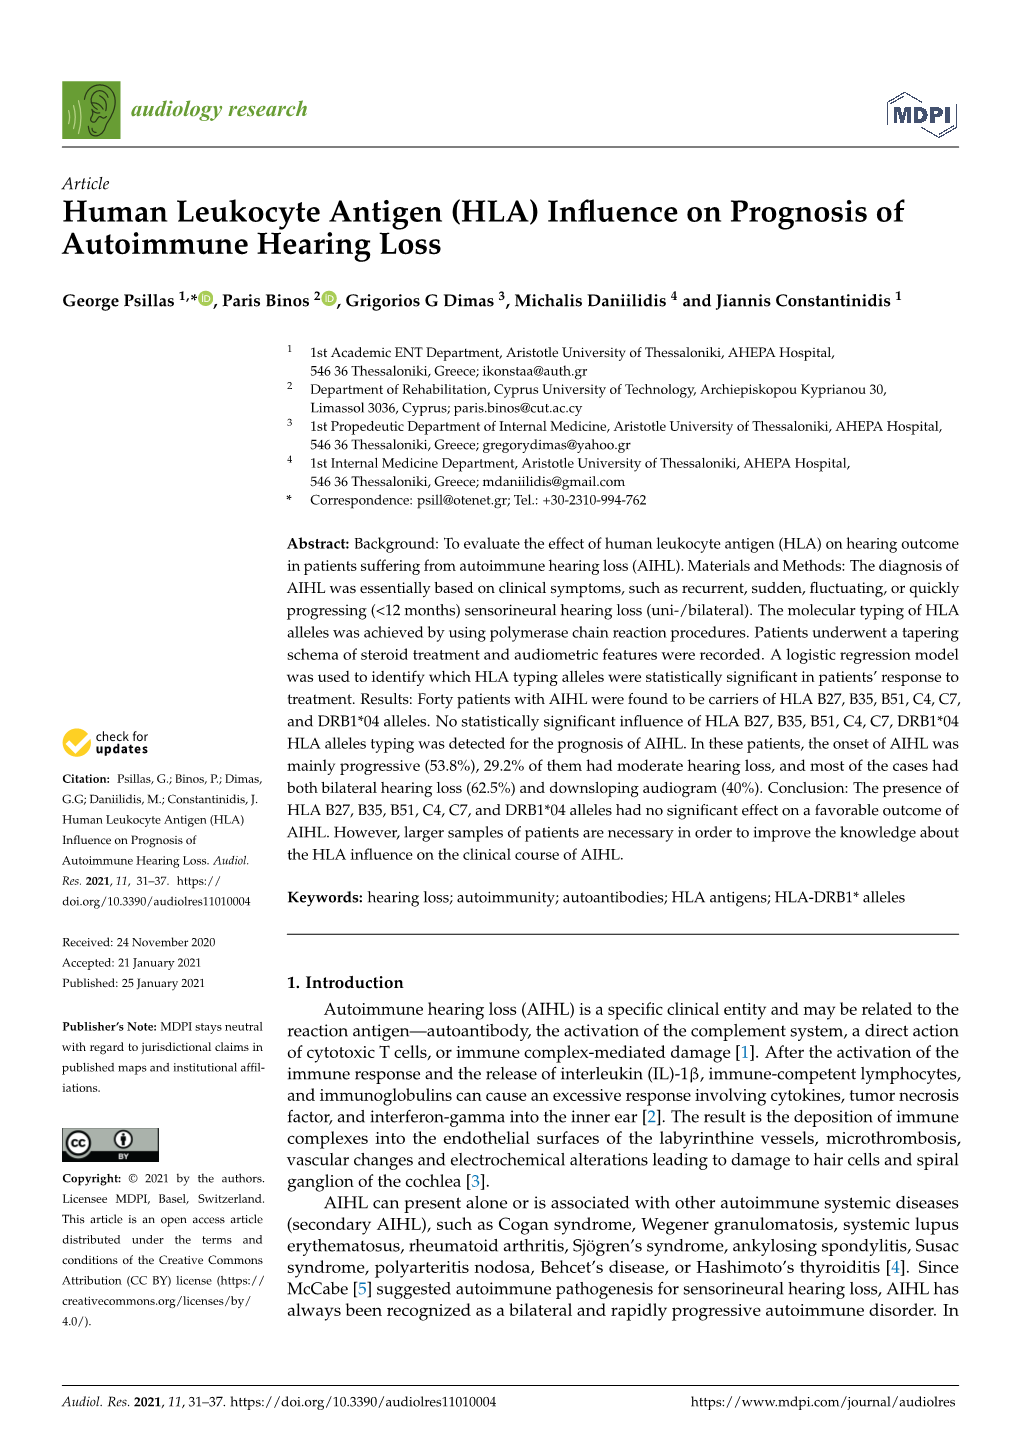 Human Leukocyte Antigen (HLA) Inﬂuence on Prognosis of Autoimmune Hearing Loss